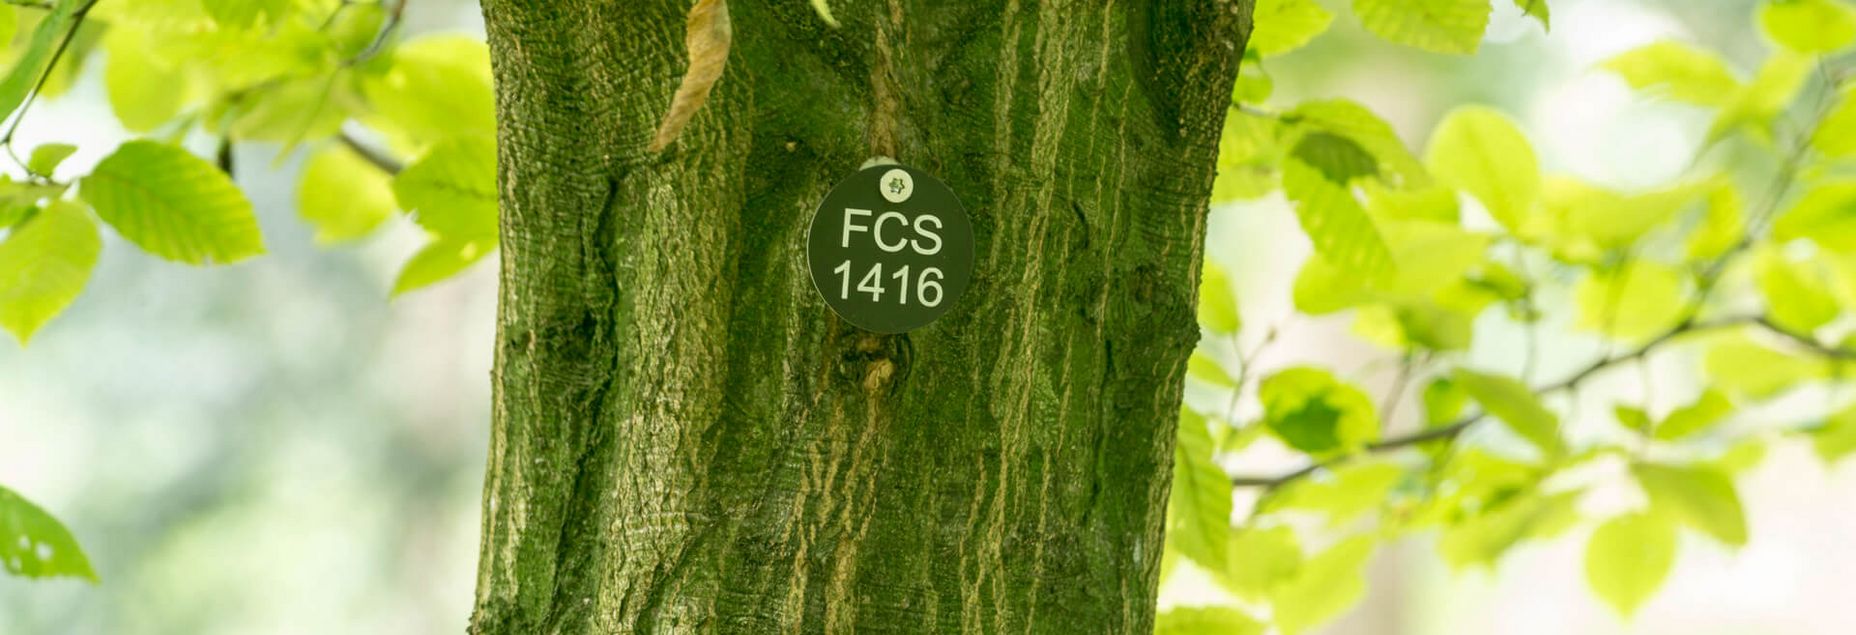 FriedWald Clam Onlineshop FCS 1416